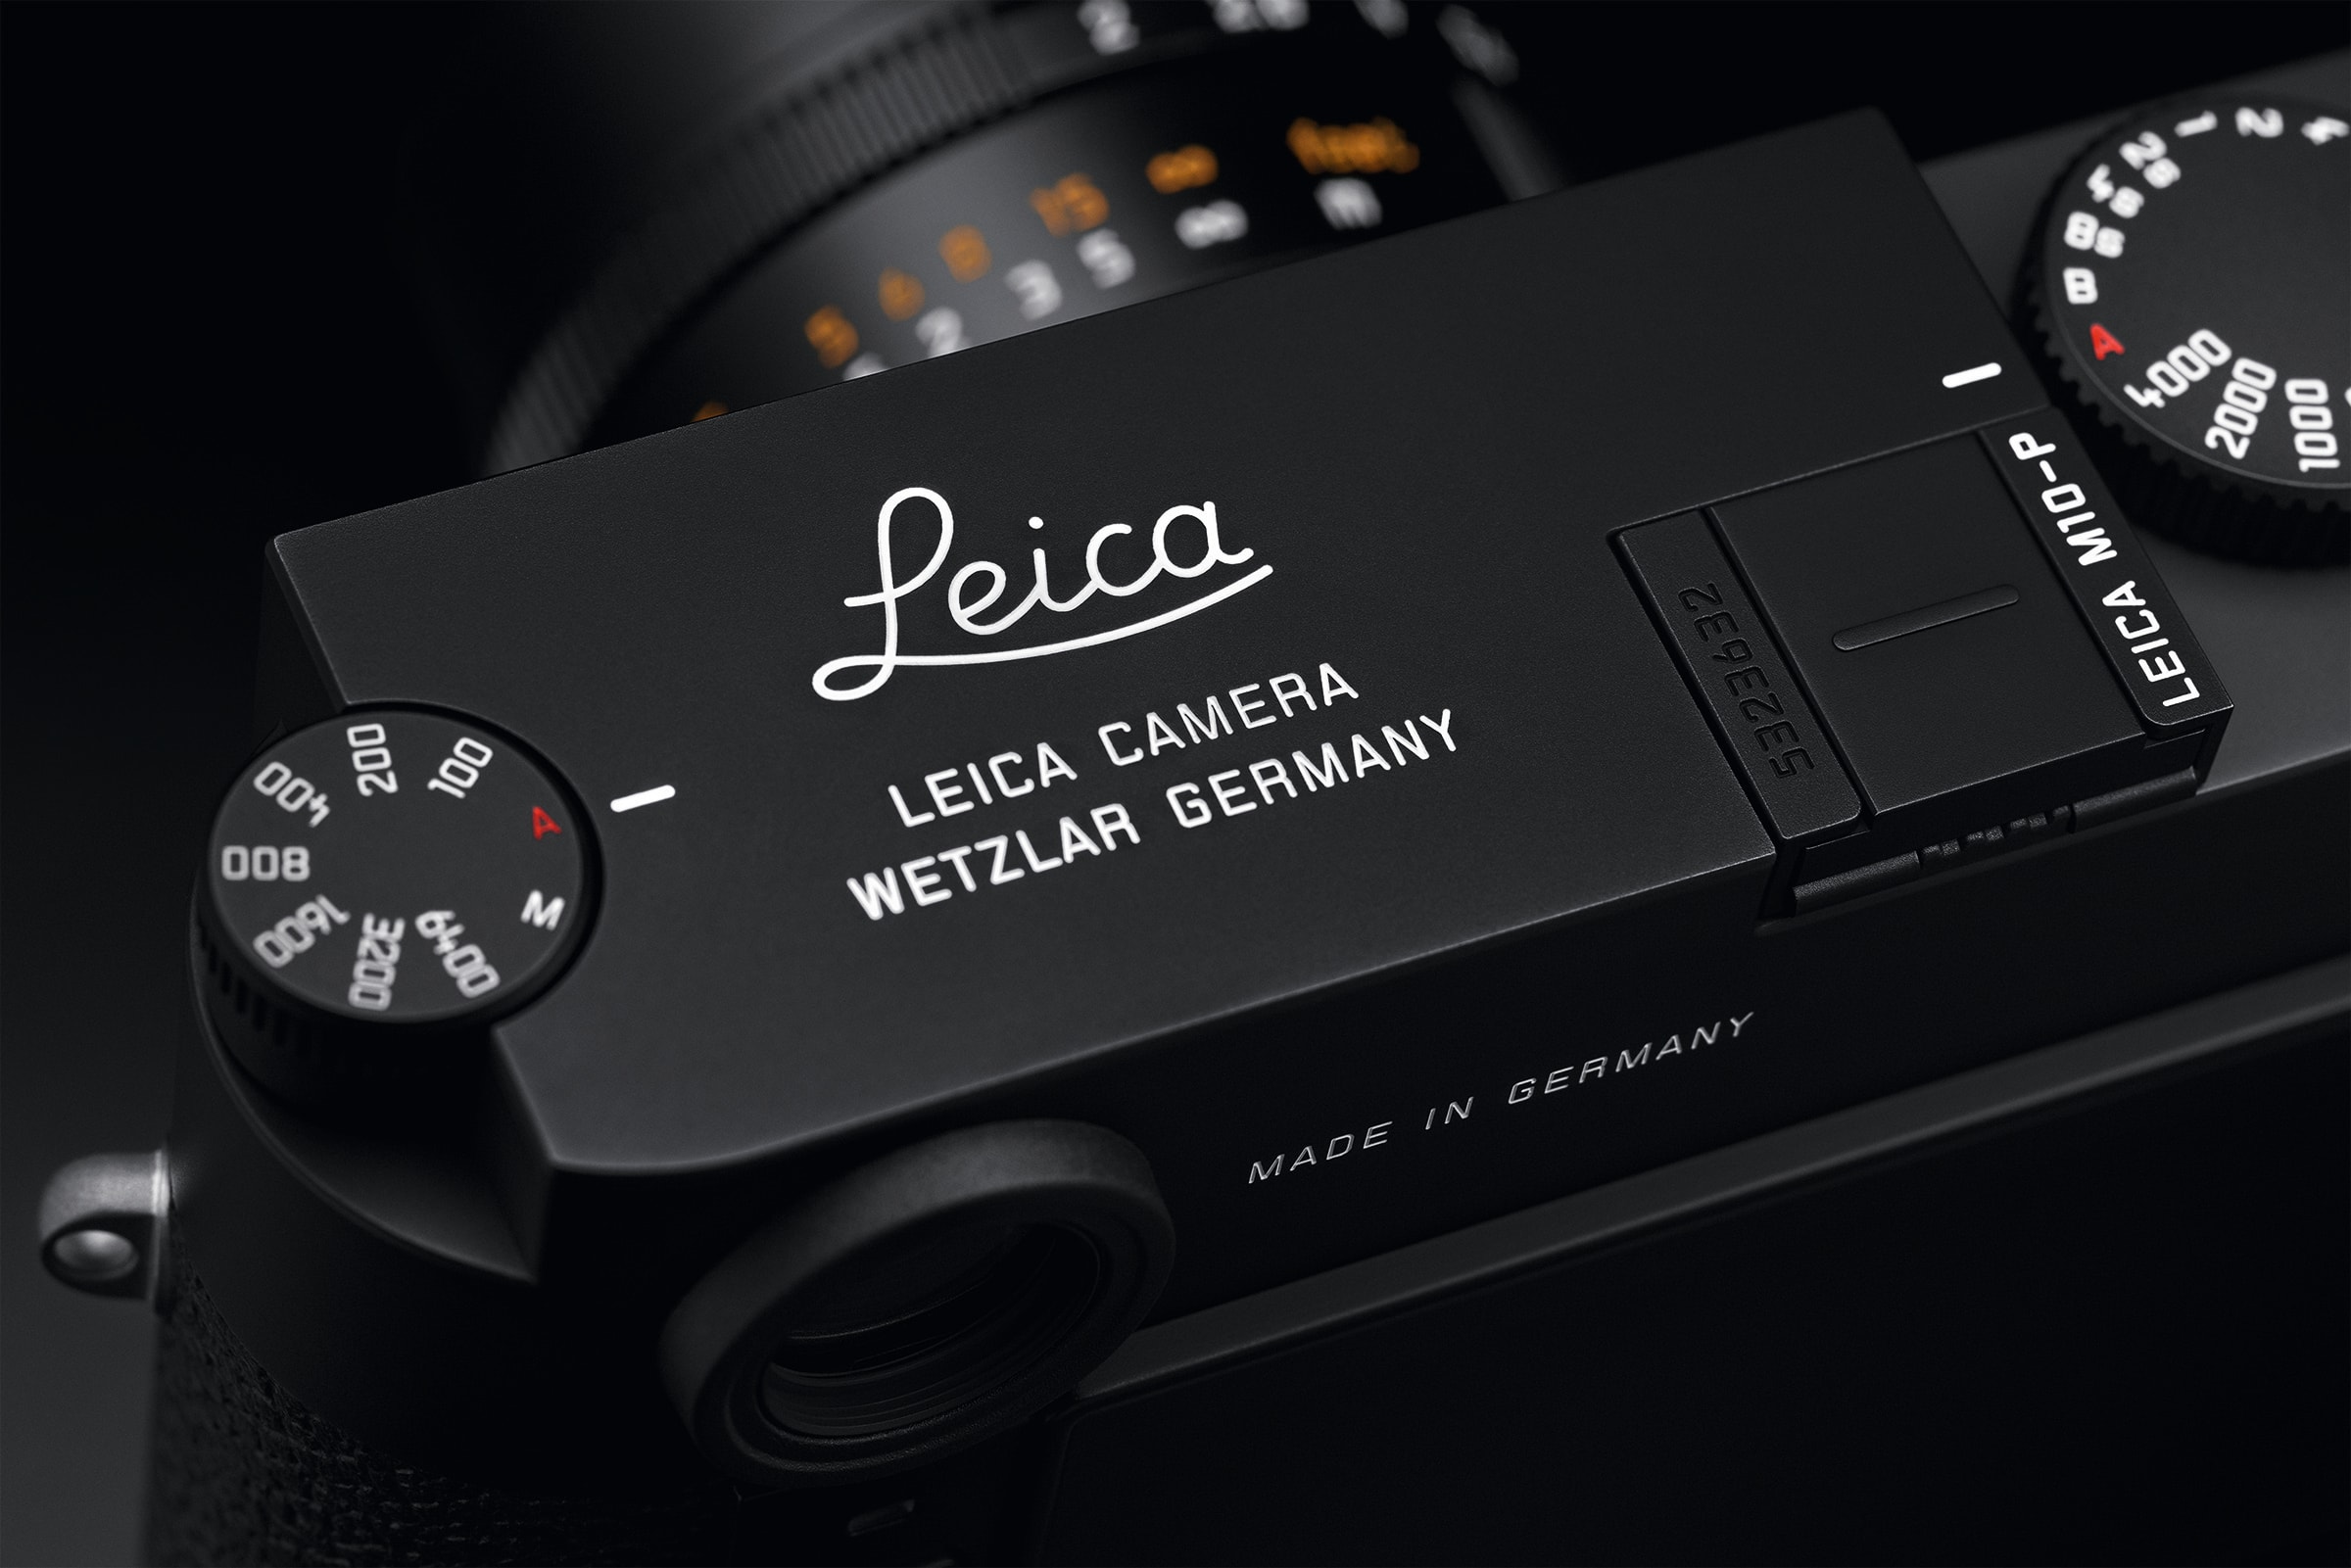 Leica 發佈新一代型號旁軸相機 M10-P